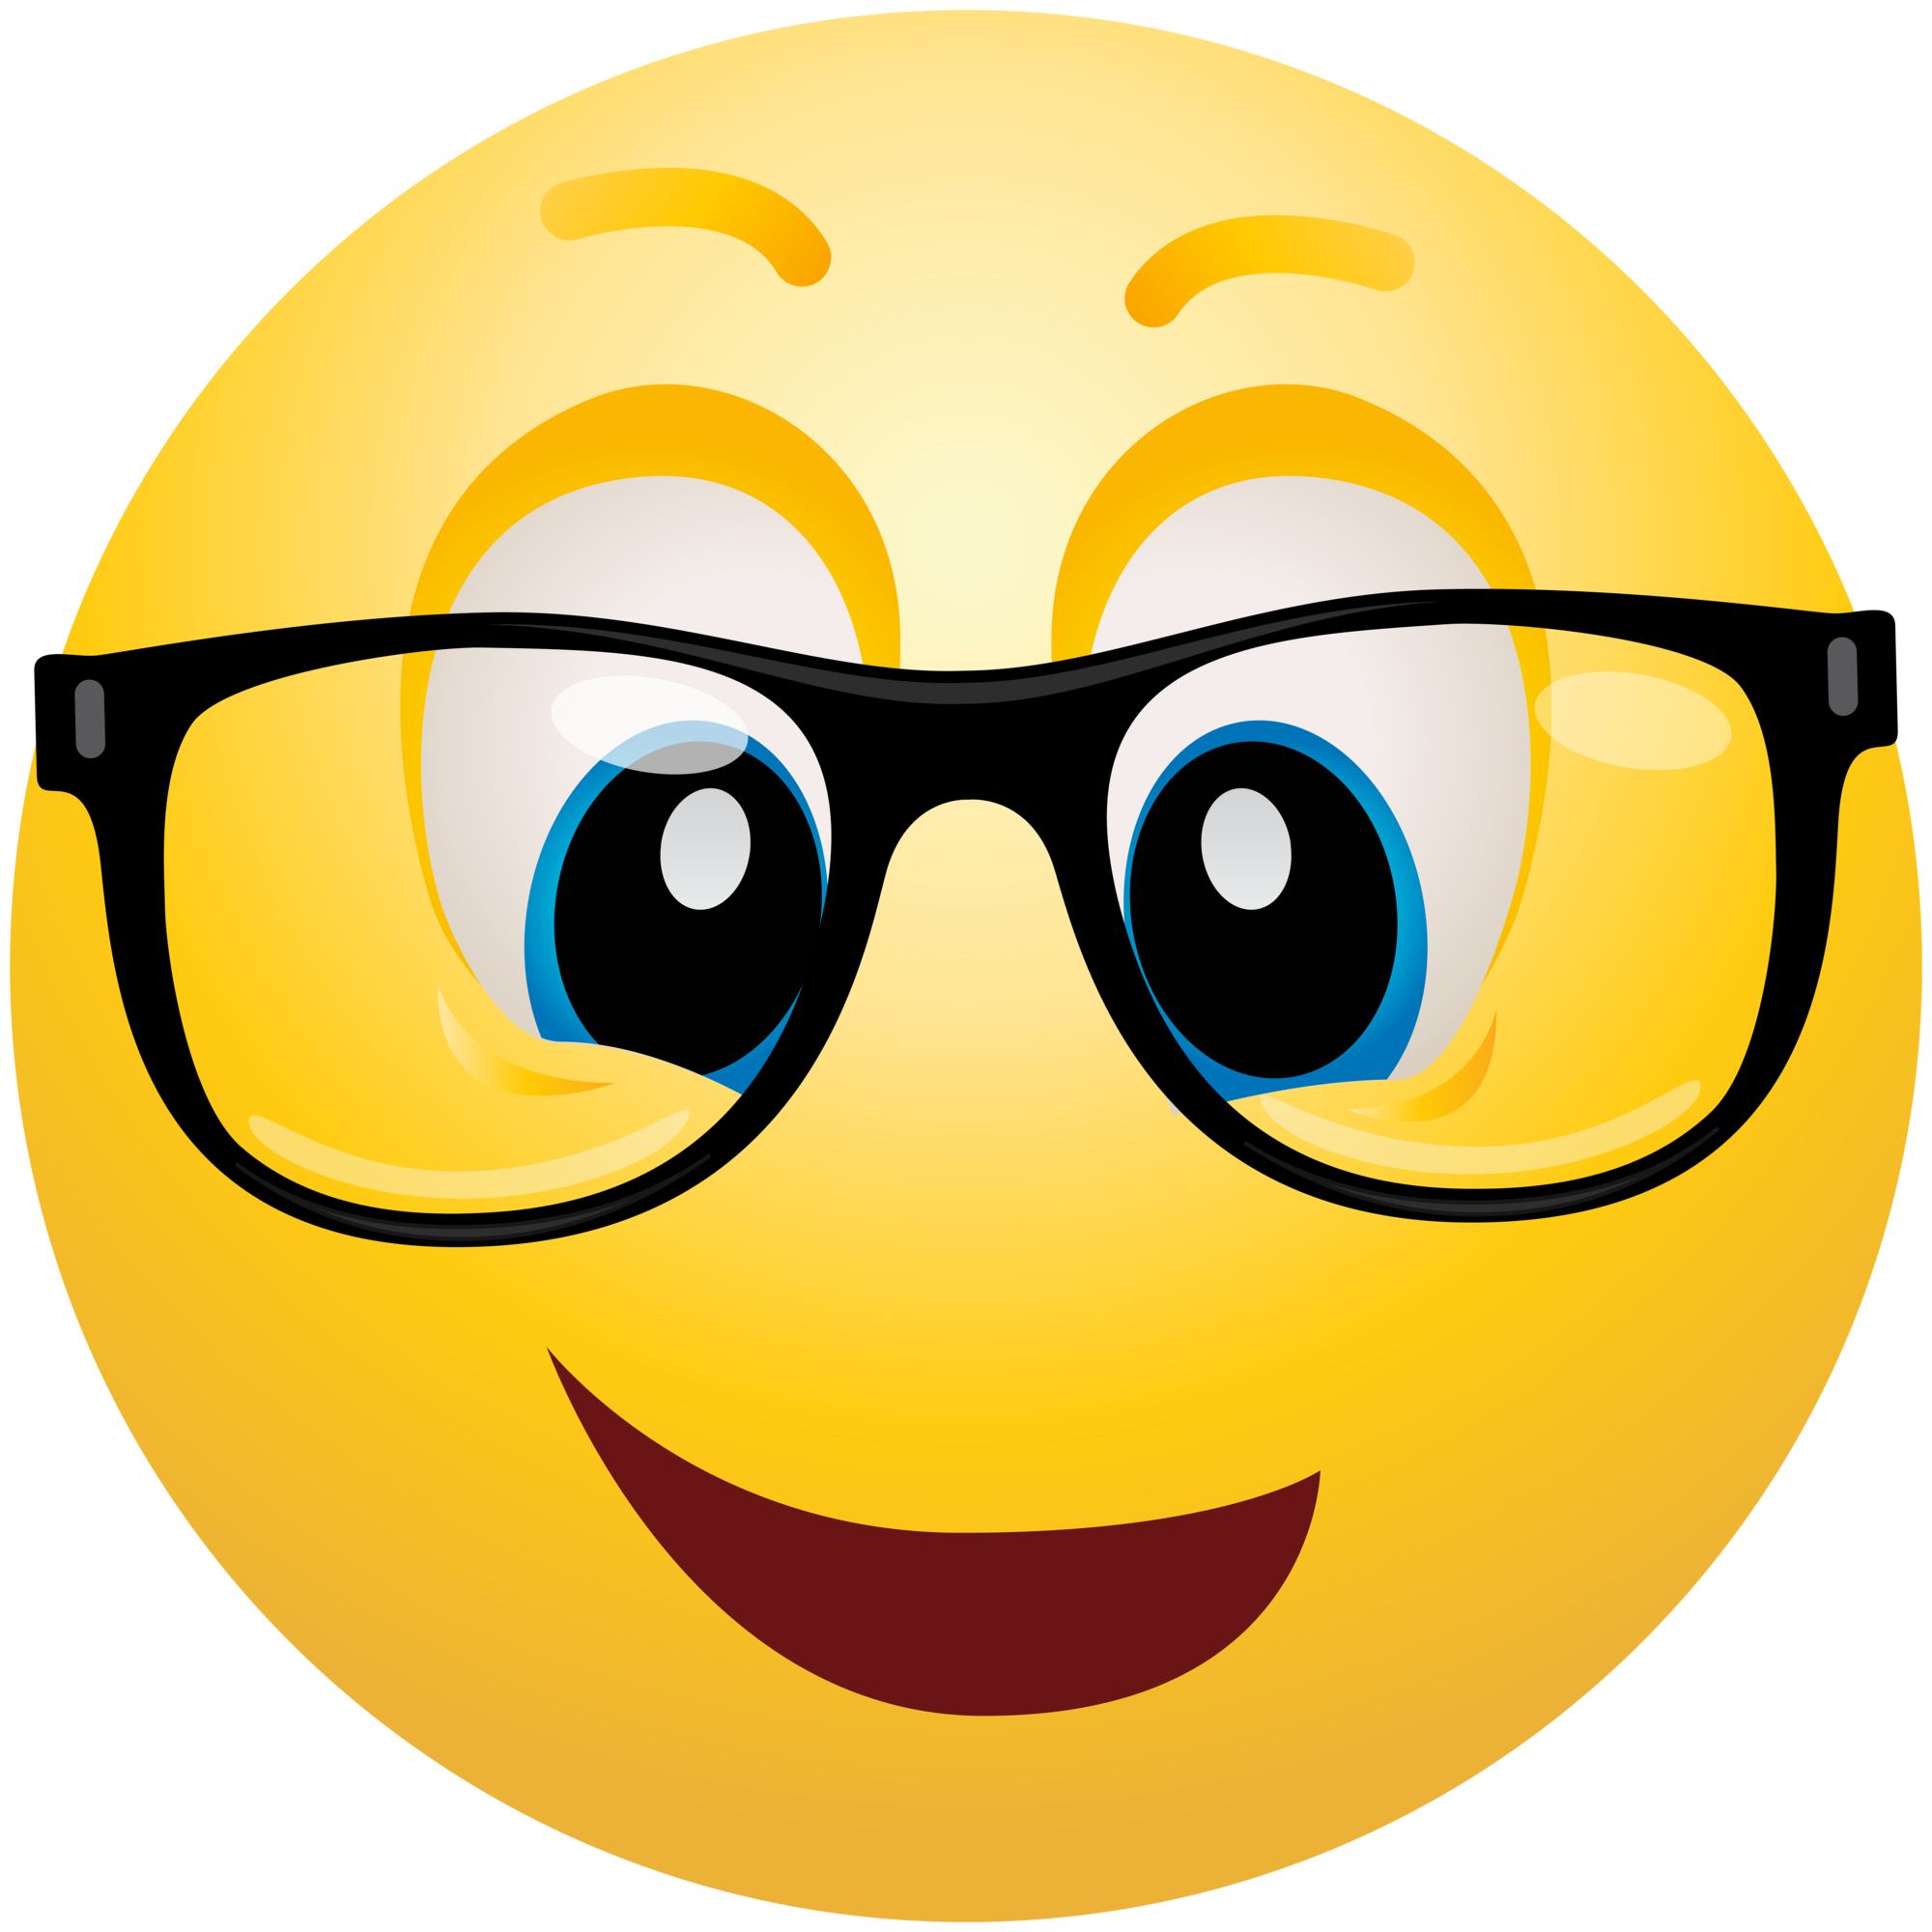 Geek emoticon emoji.